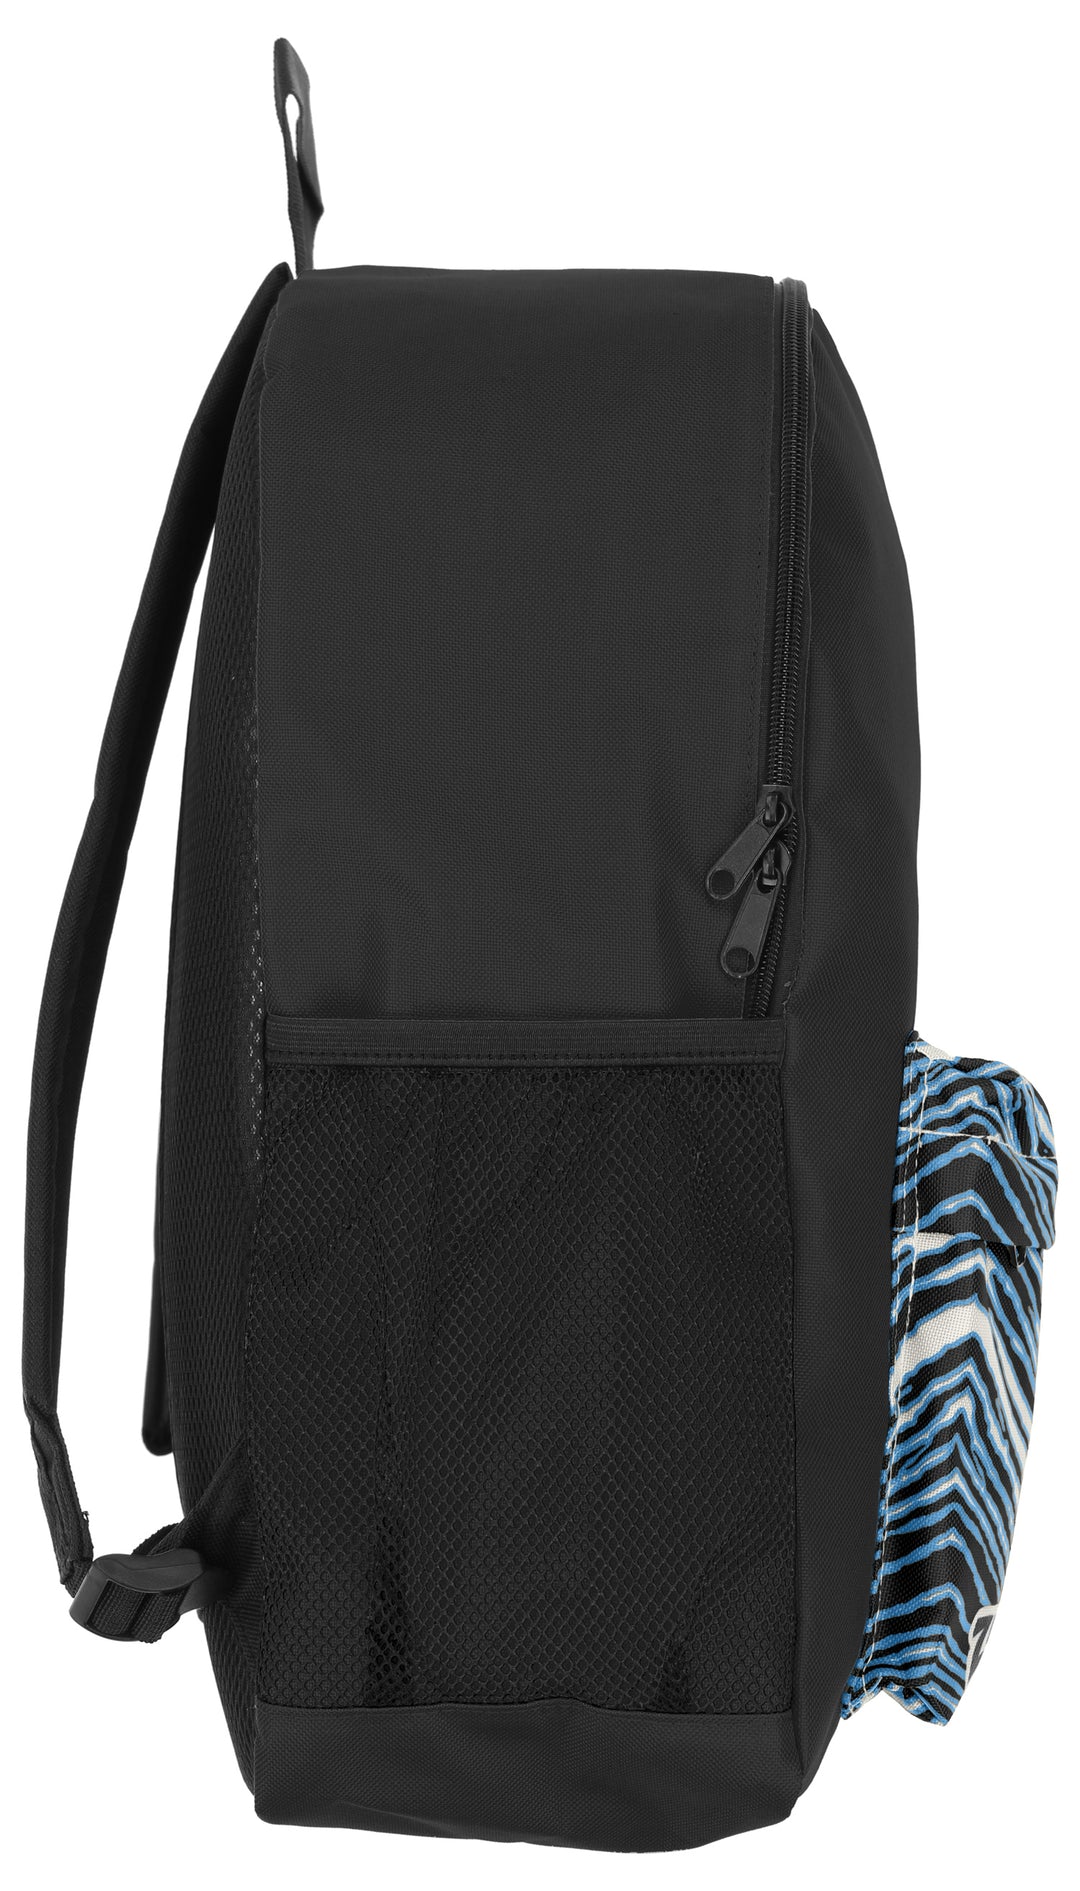 FOCO X ZUBAZ NFL Carolina Panthers Zebra 2 Collab Printed Backpack